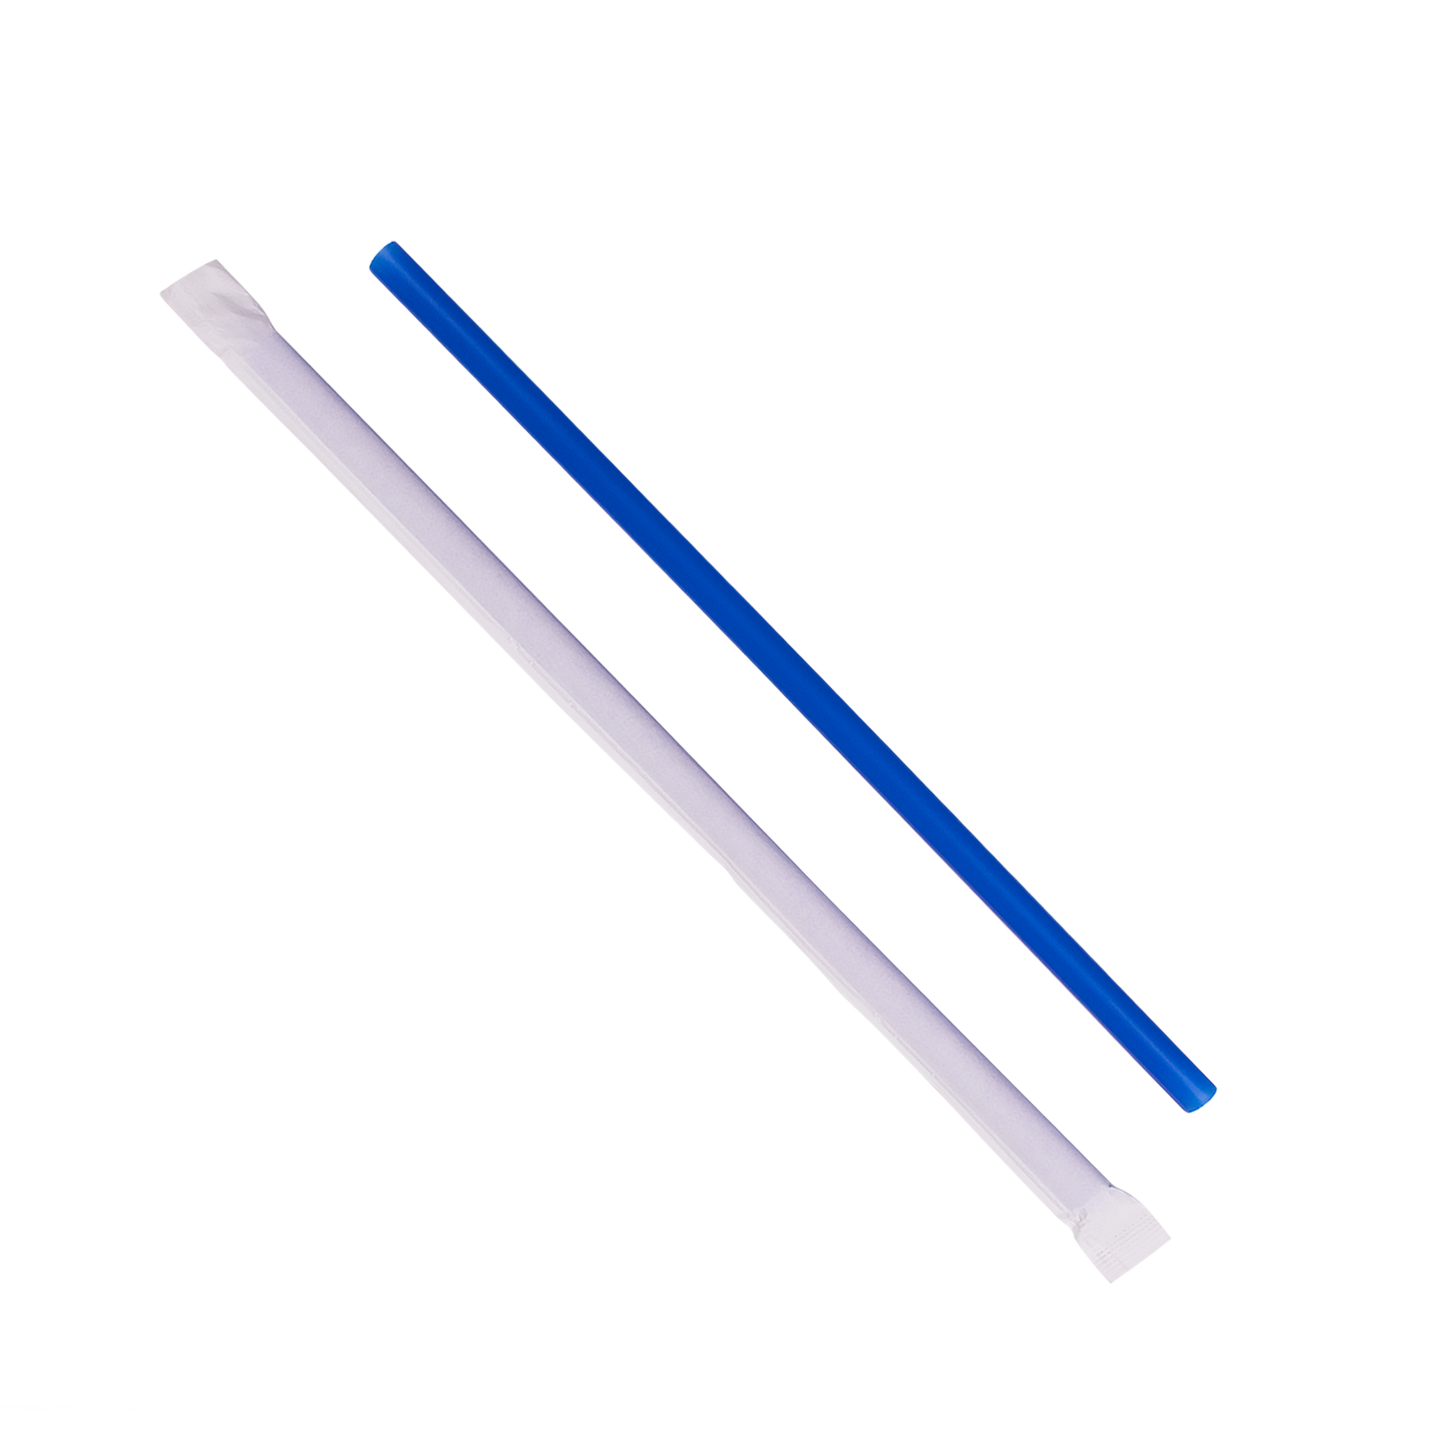 KARAT 9'' GIANT STRAWS (8MM) PAPER WRAPPED - BLUE - 1,200 CT, C9120 (BLUE)